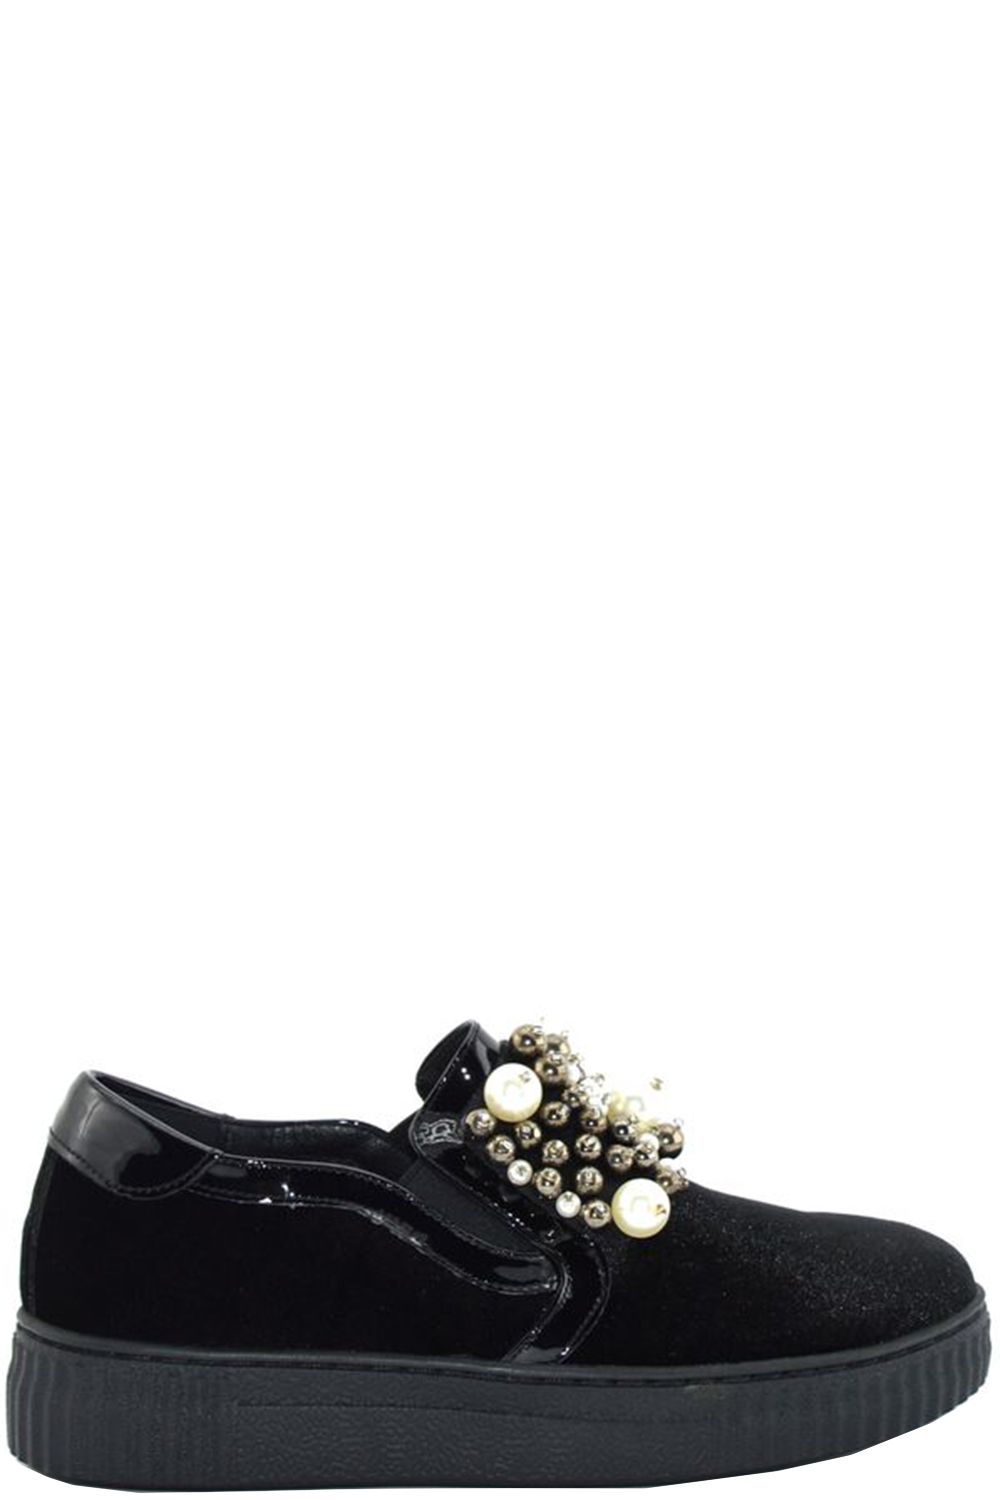 Ботинки Holala, размер 29, цвет черный HS0020T - фото 8